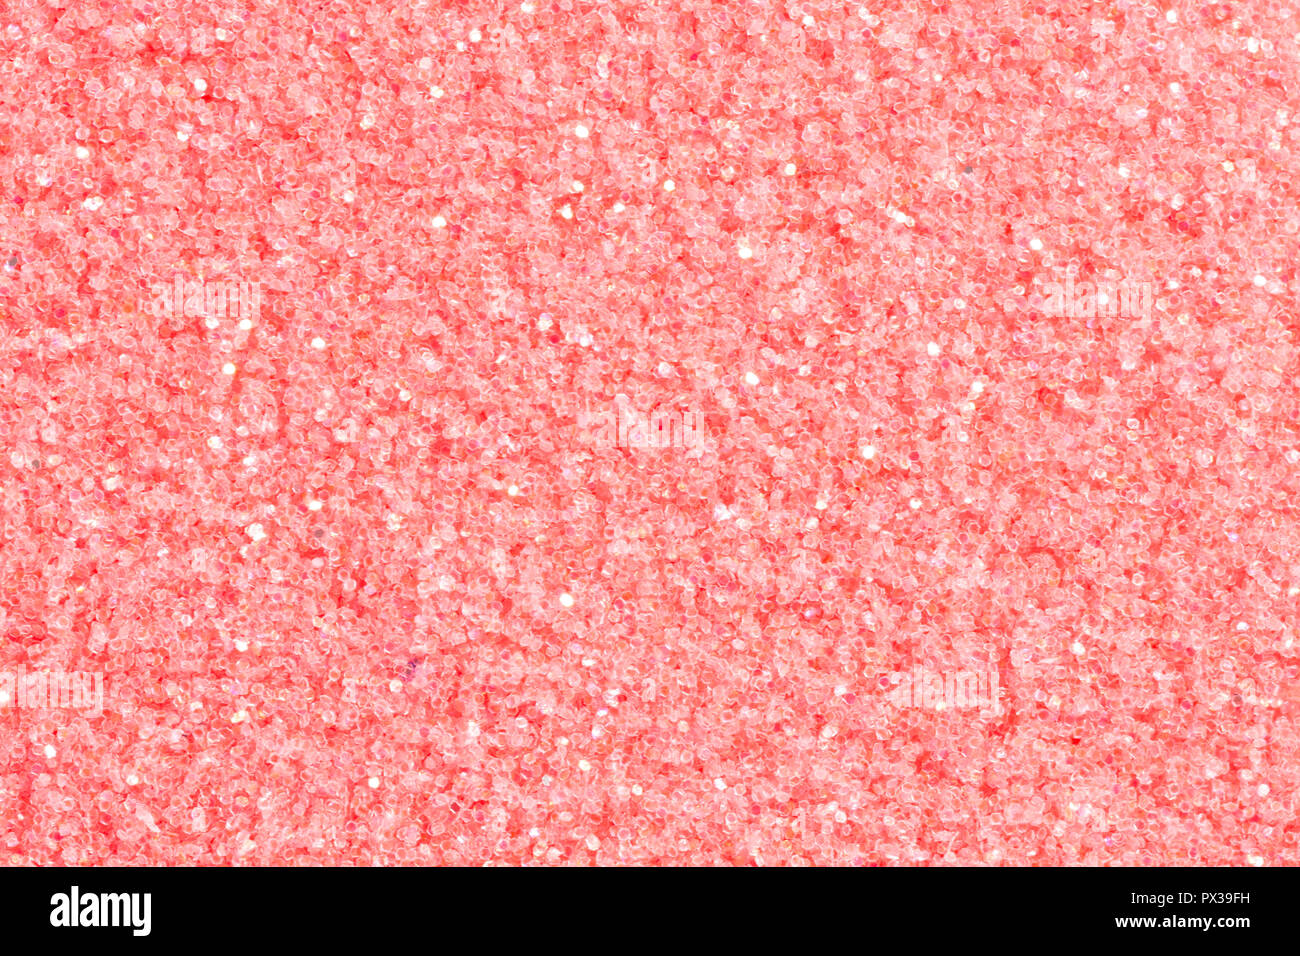 Light pink glitter background with glare. Pink glitter texture Stock Photo  - Alamy